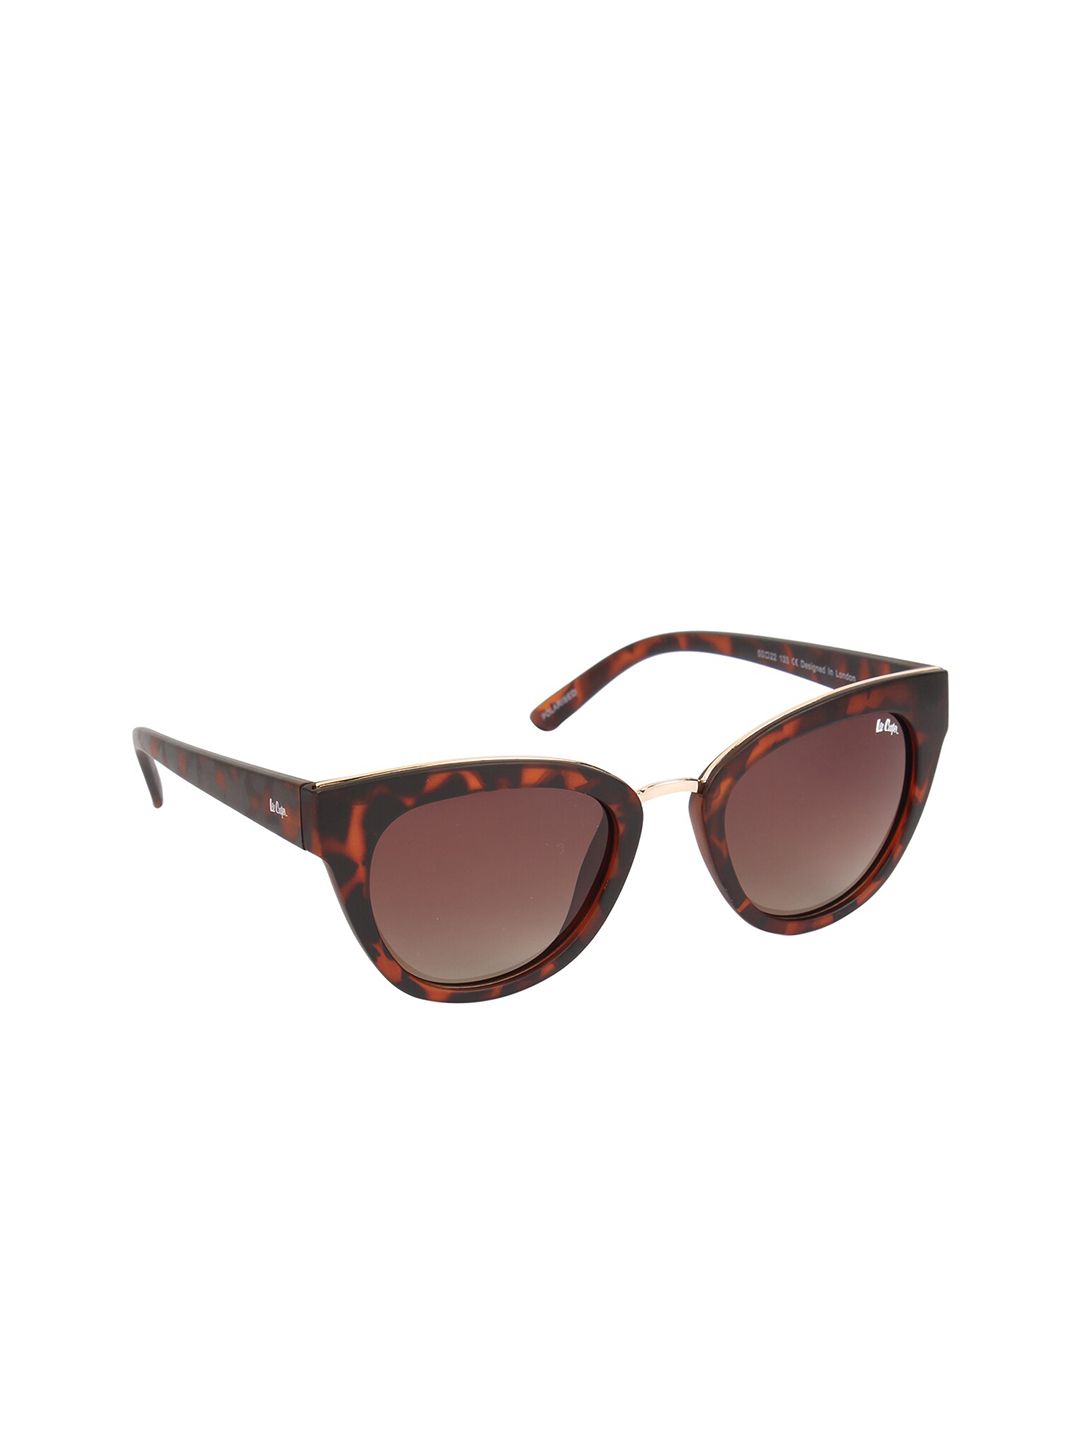 Lee Cooper Women's Brown Sunglasses Price in India